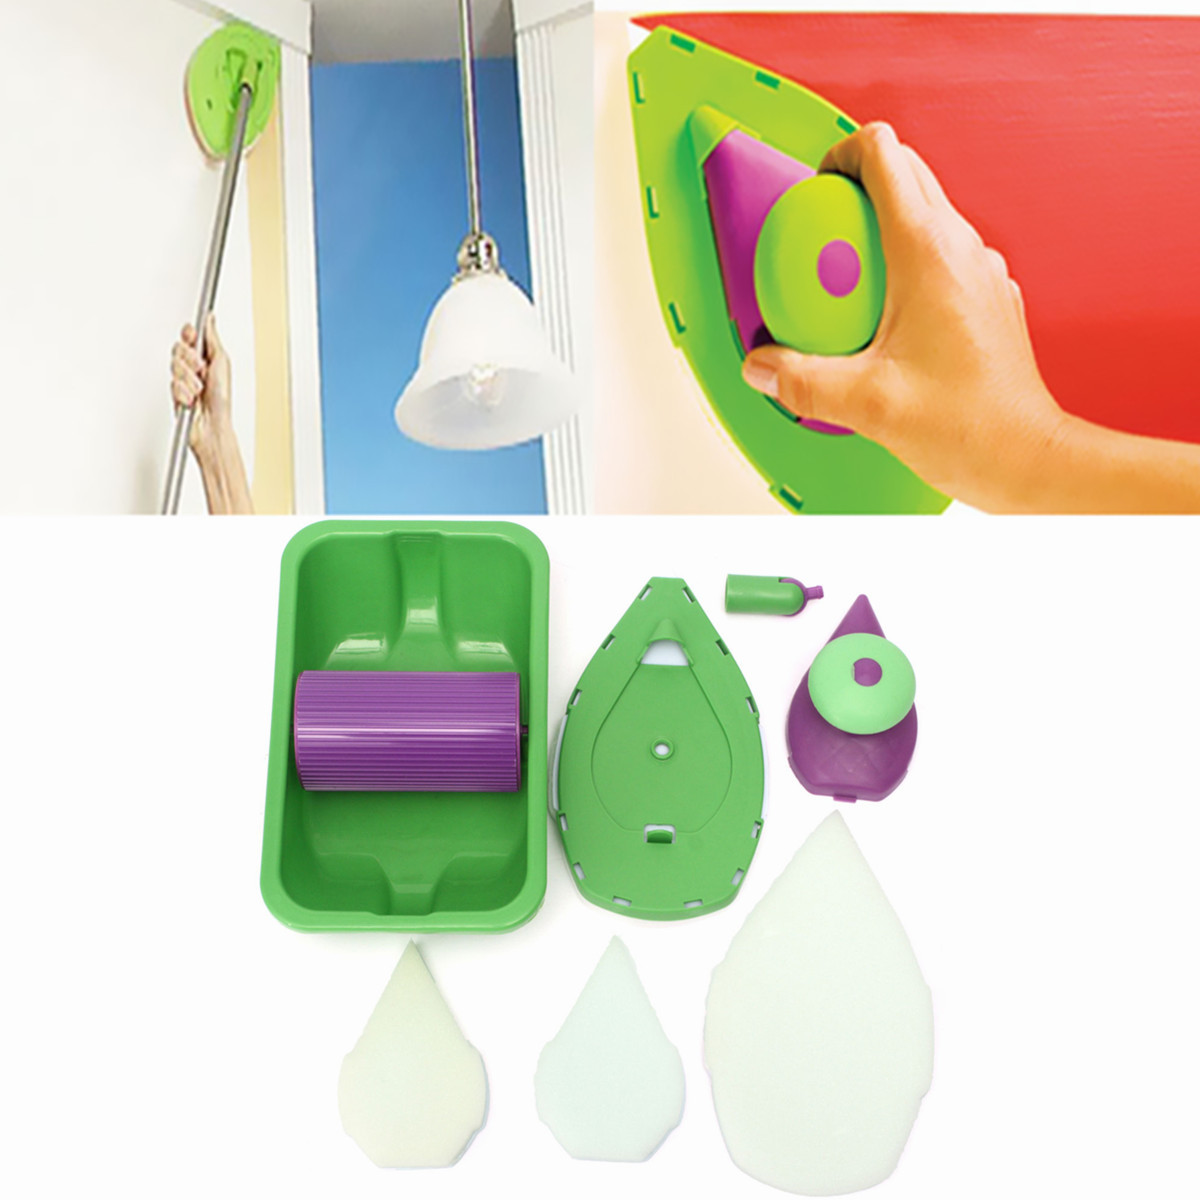 DIY-Home-Painting-Pad-Kit-Roller-Brush-Tray-Paint-Rollers-Kit-Painting-Roller-Tray-Brush-Multifuncti-1304775-6